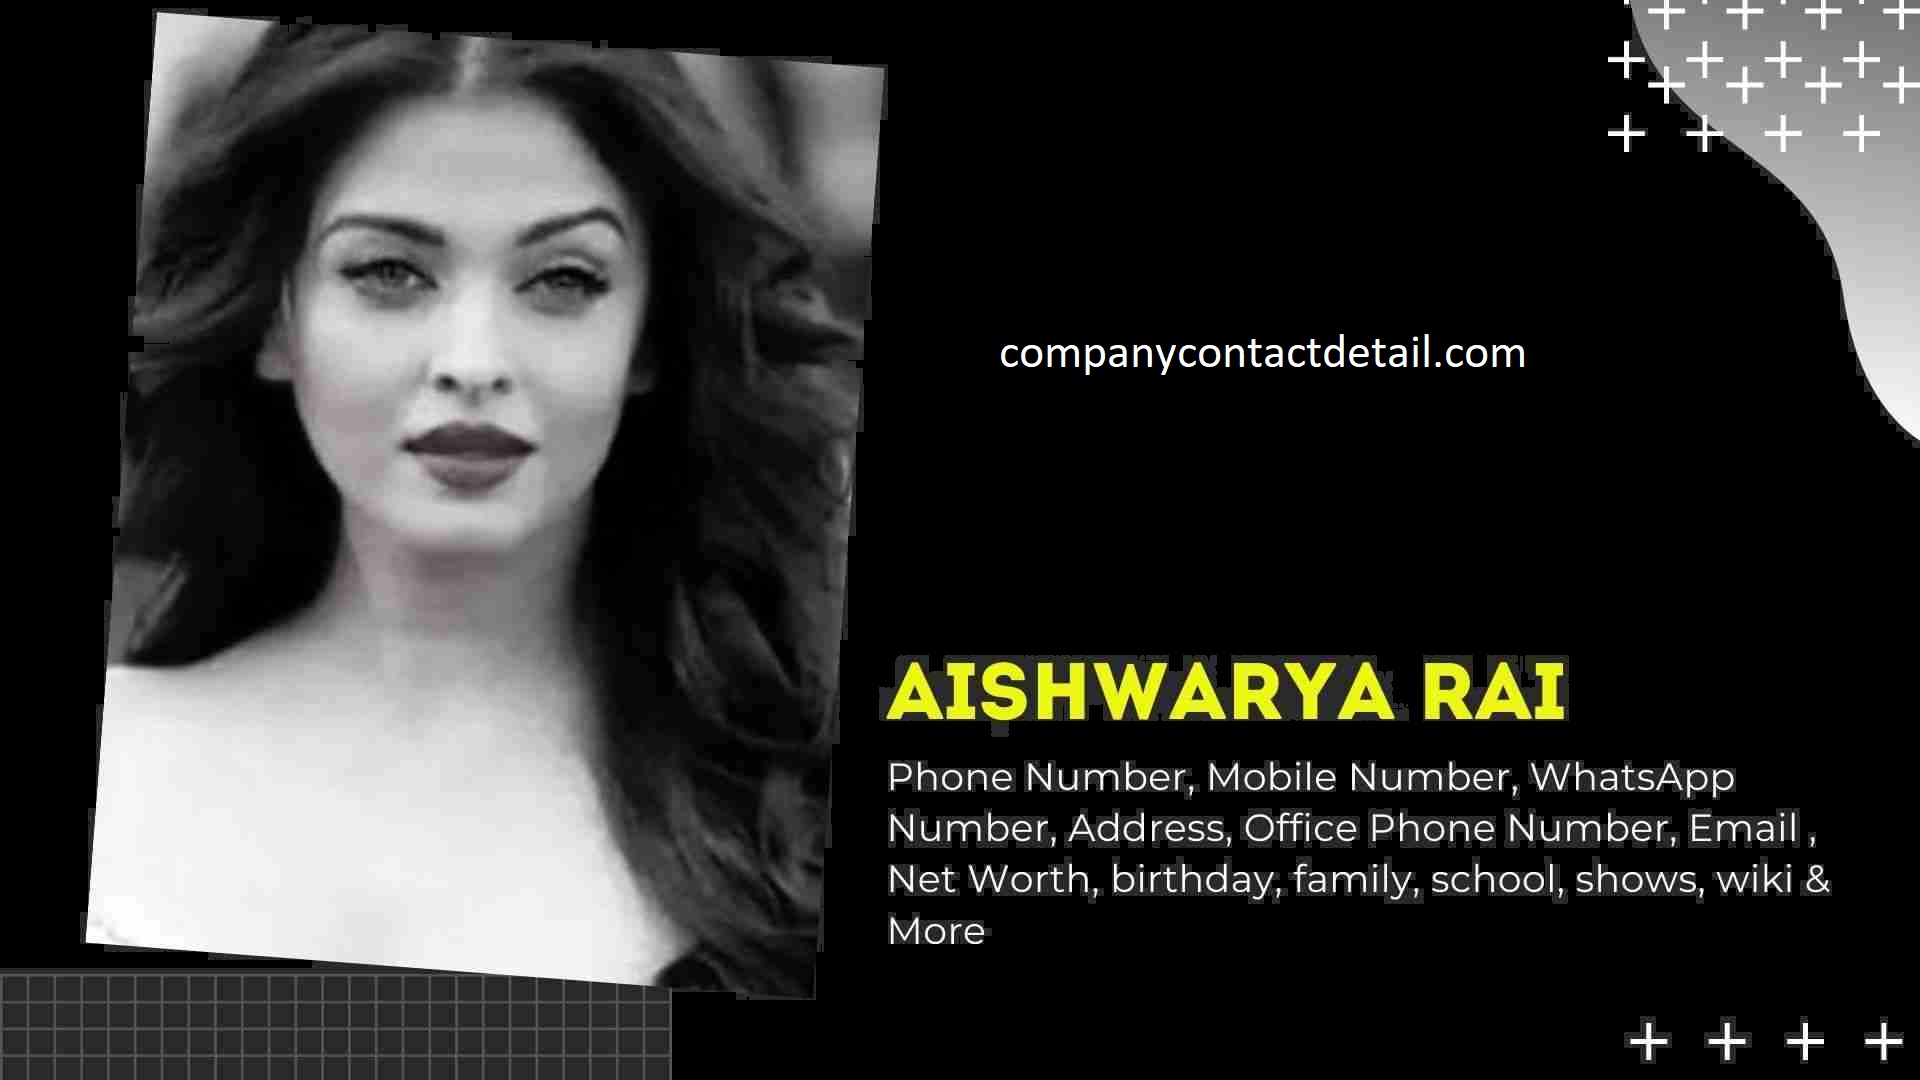 Aishwarya Rai Phone Number, Aishwarya rai personal mobile number, Aishwarya rai WhatsApp group, Abhishek Bachchan's contact number, Aishwarya rai mobile phone, Aishwarya rai email id, Aishwarya rai house, Aishwarya rai age, Aishwarya rai facebook,